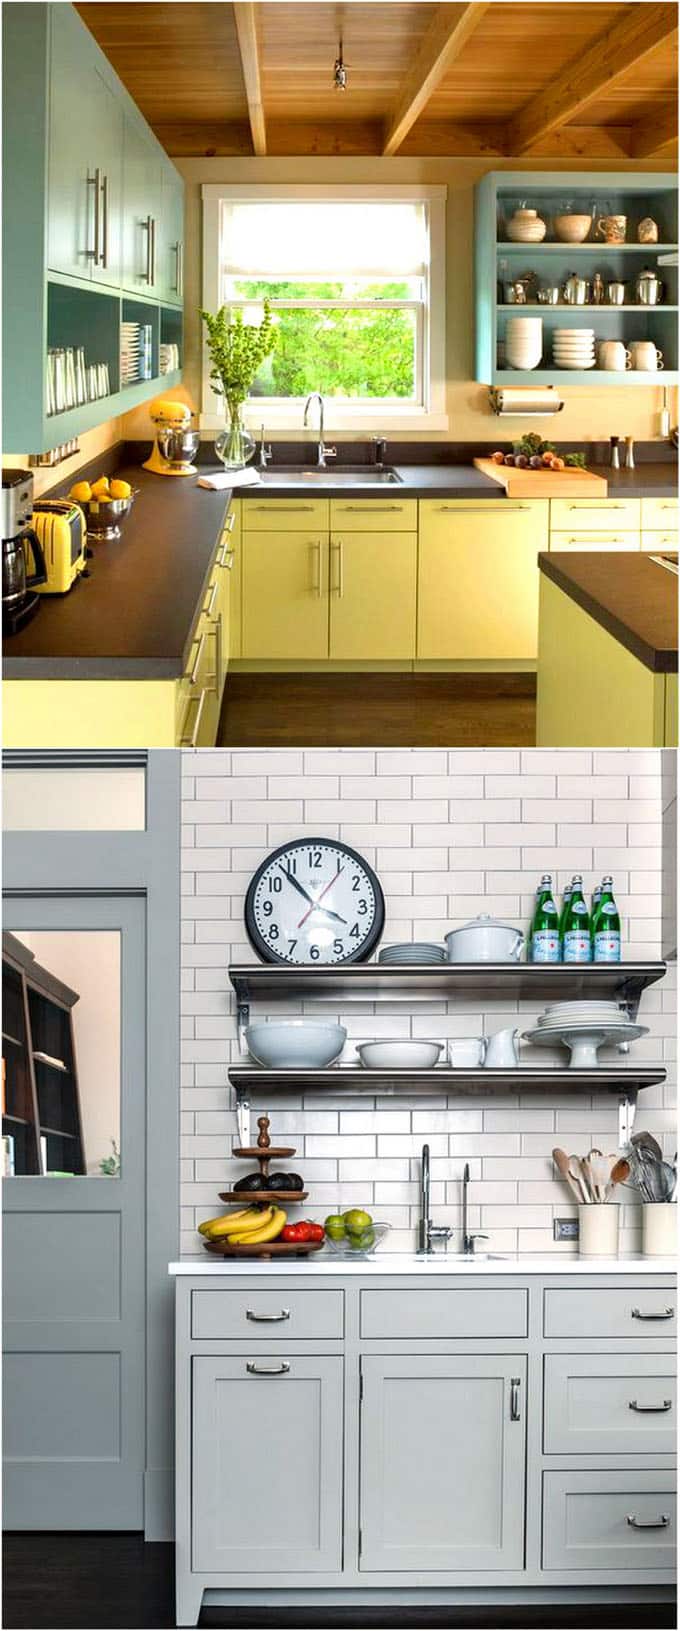 25-beautiful-paint-colors-for-kitchen-cabinets-apieceofrainbowblog (11)